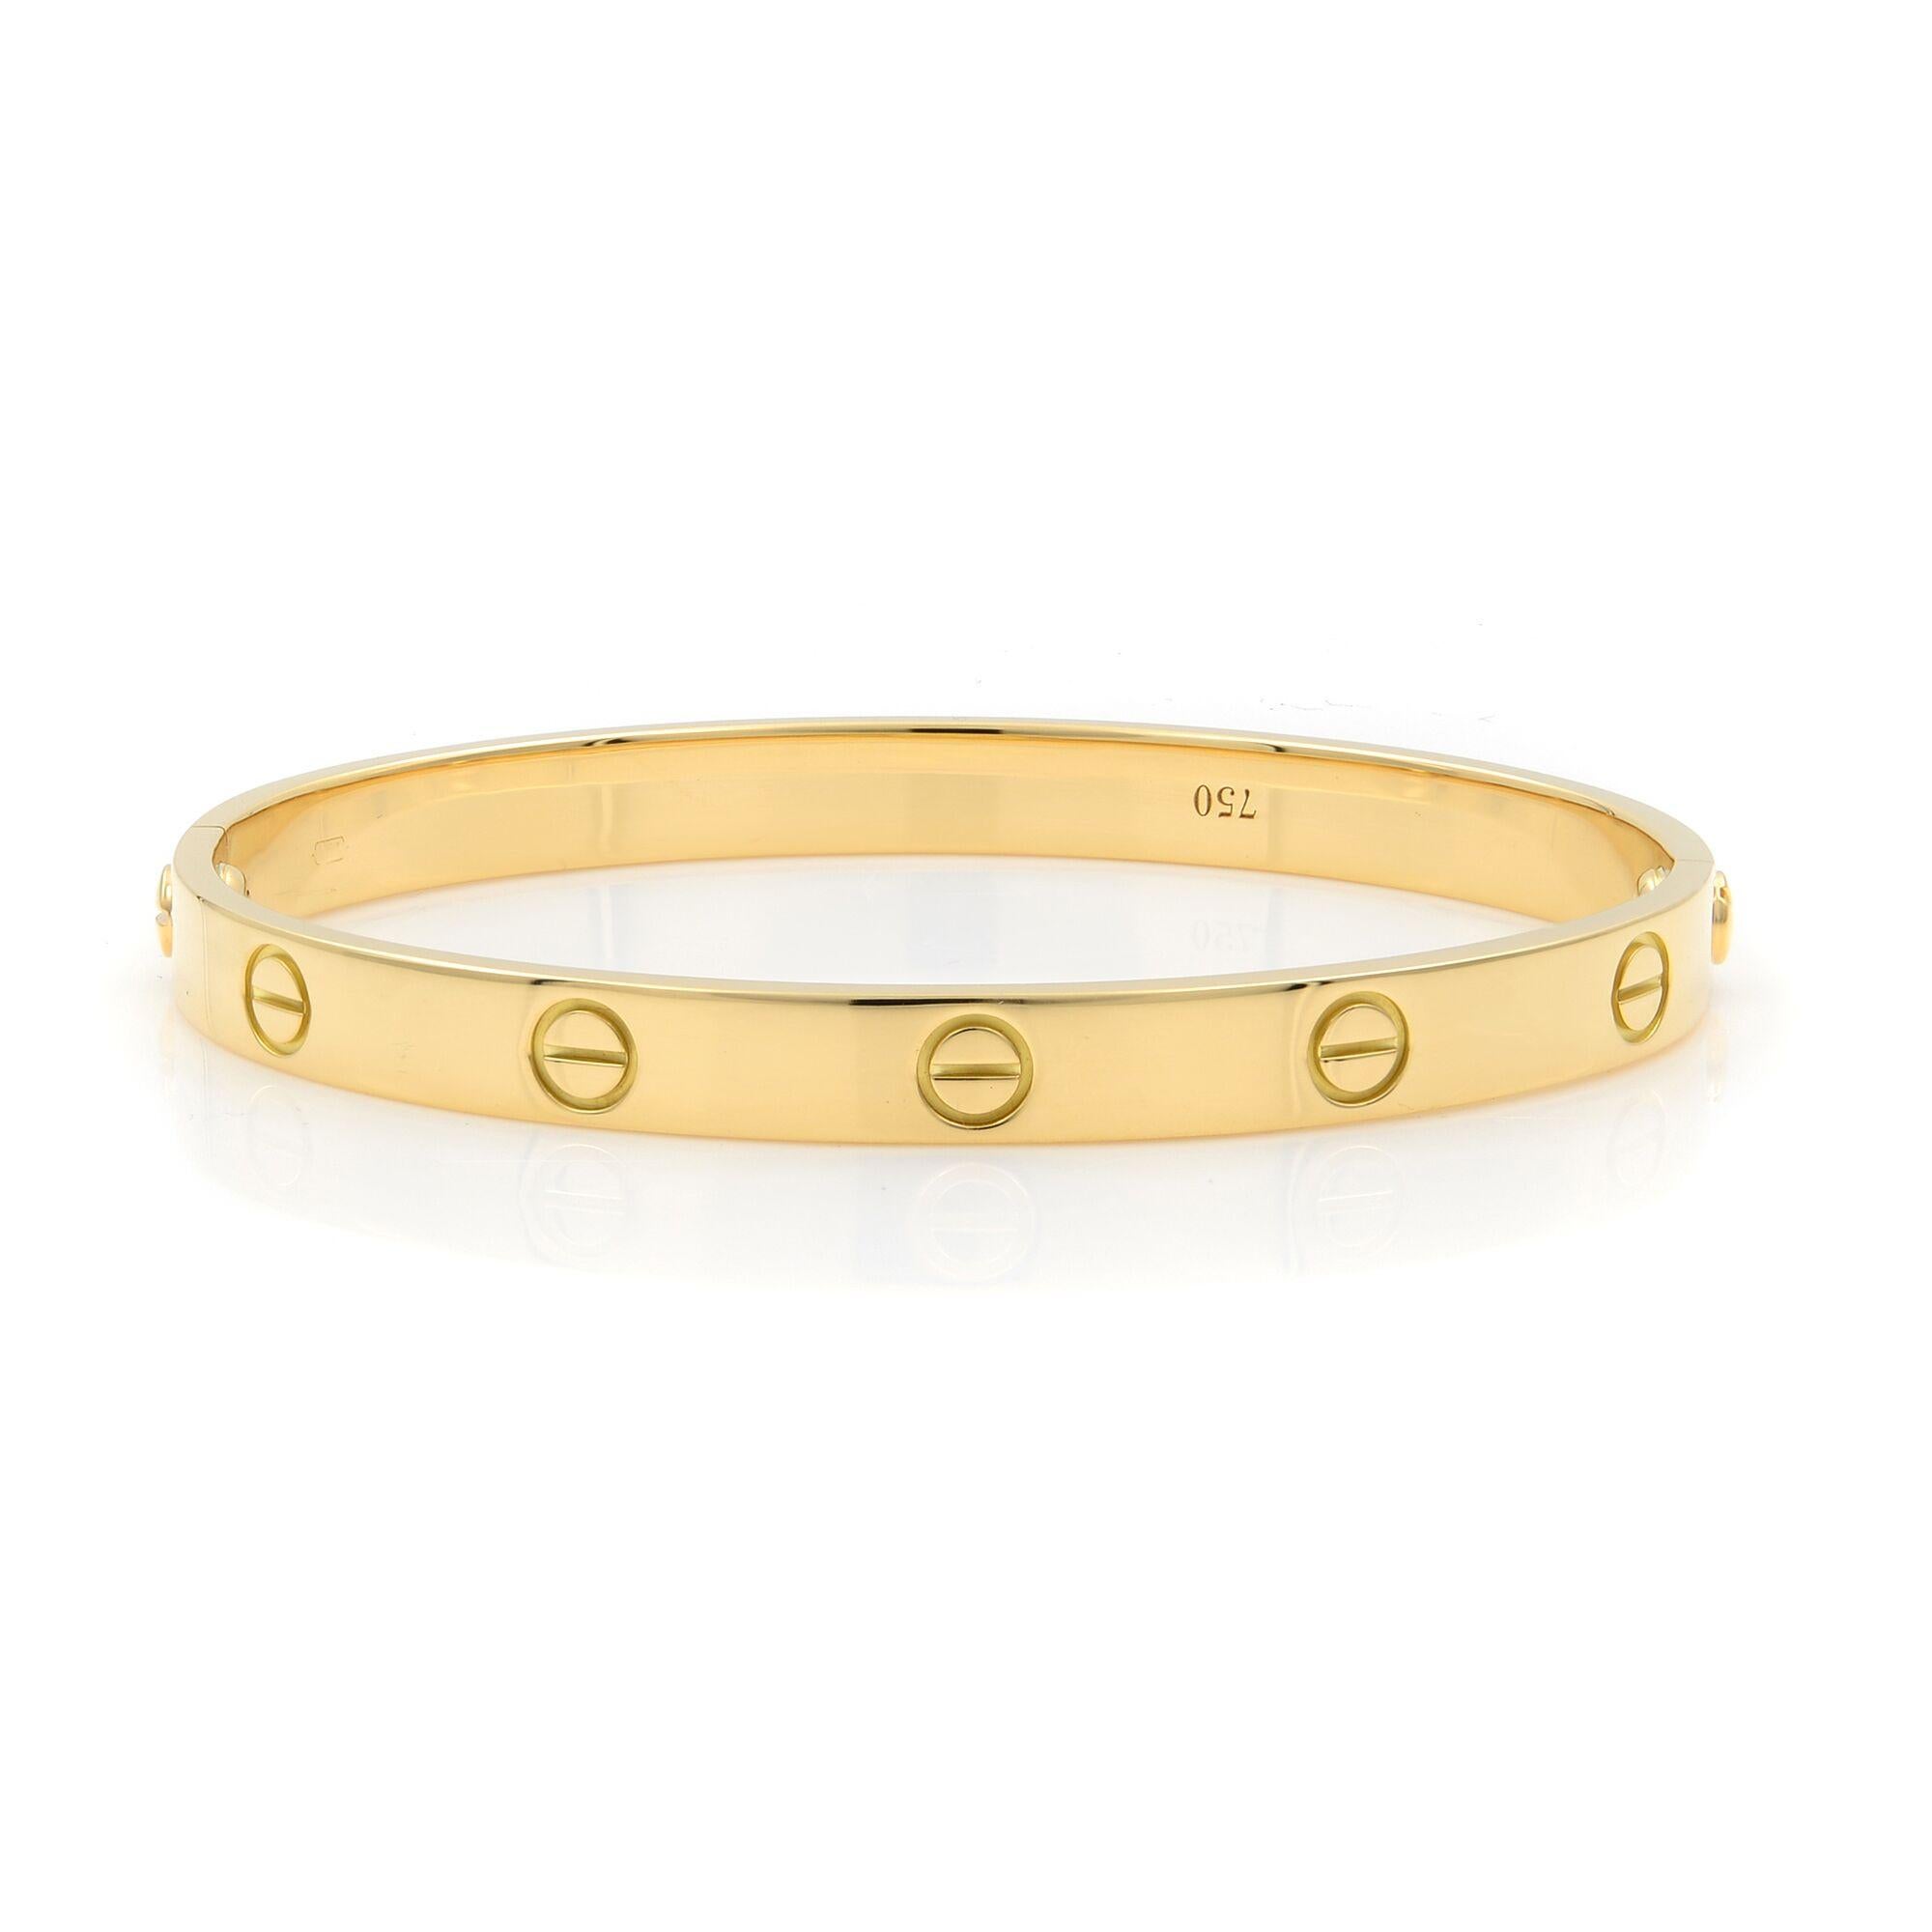 Cartier Love Bracelet Size 18 18K Yellow Gold. Old screw system. The bracelet is marked 